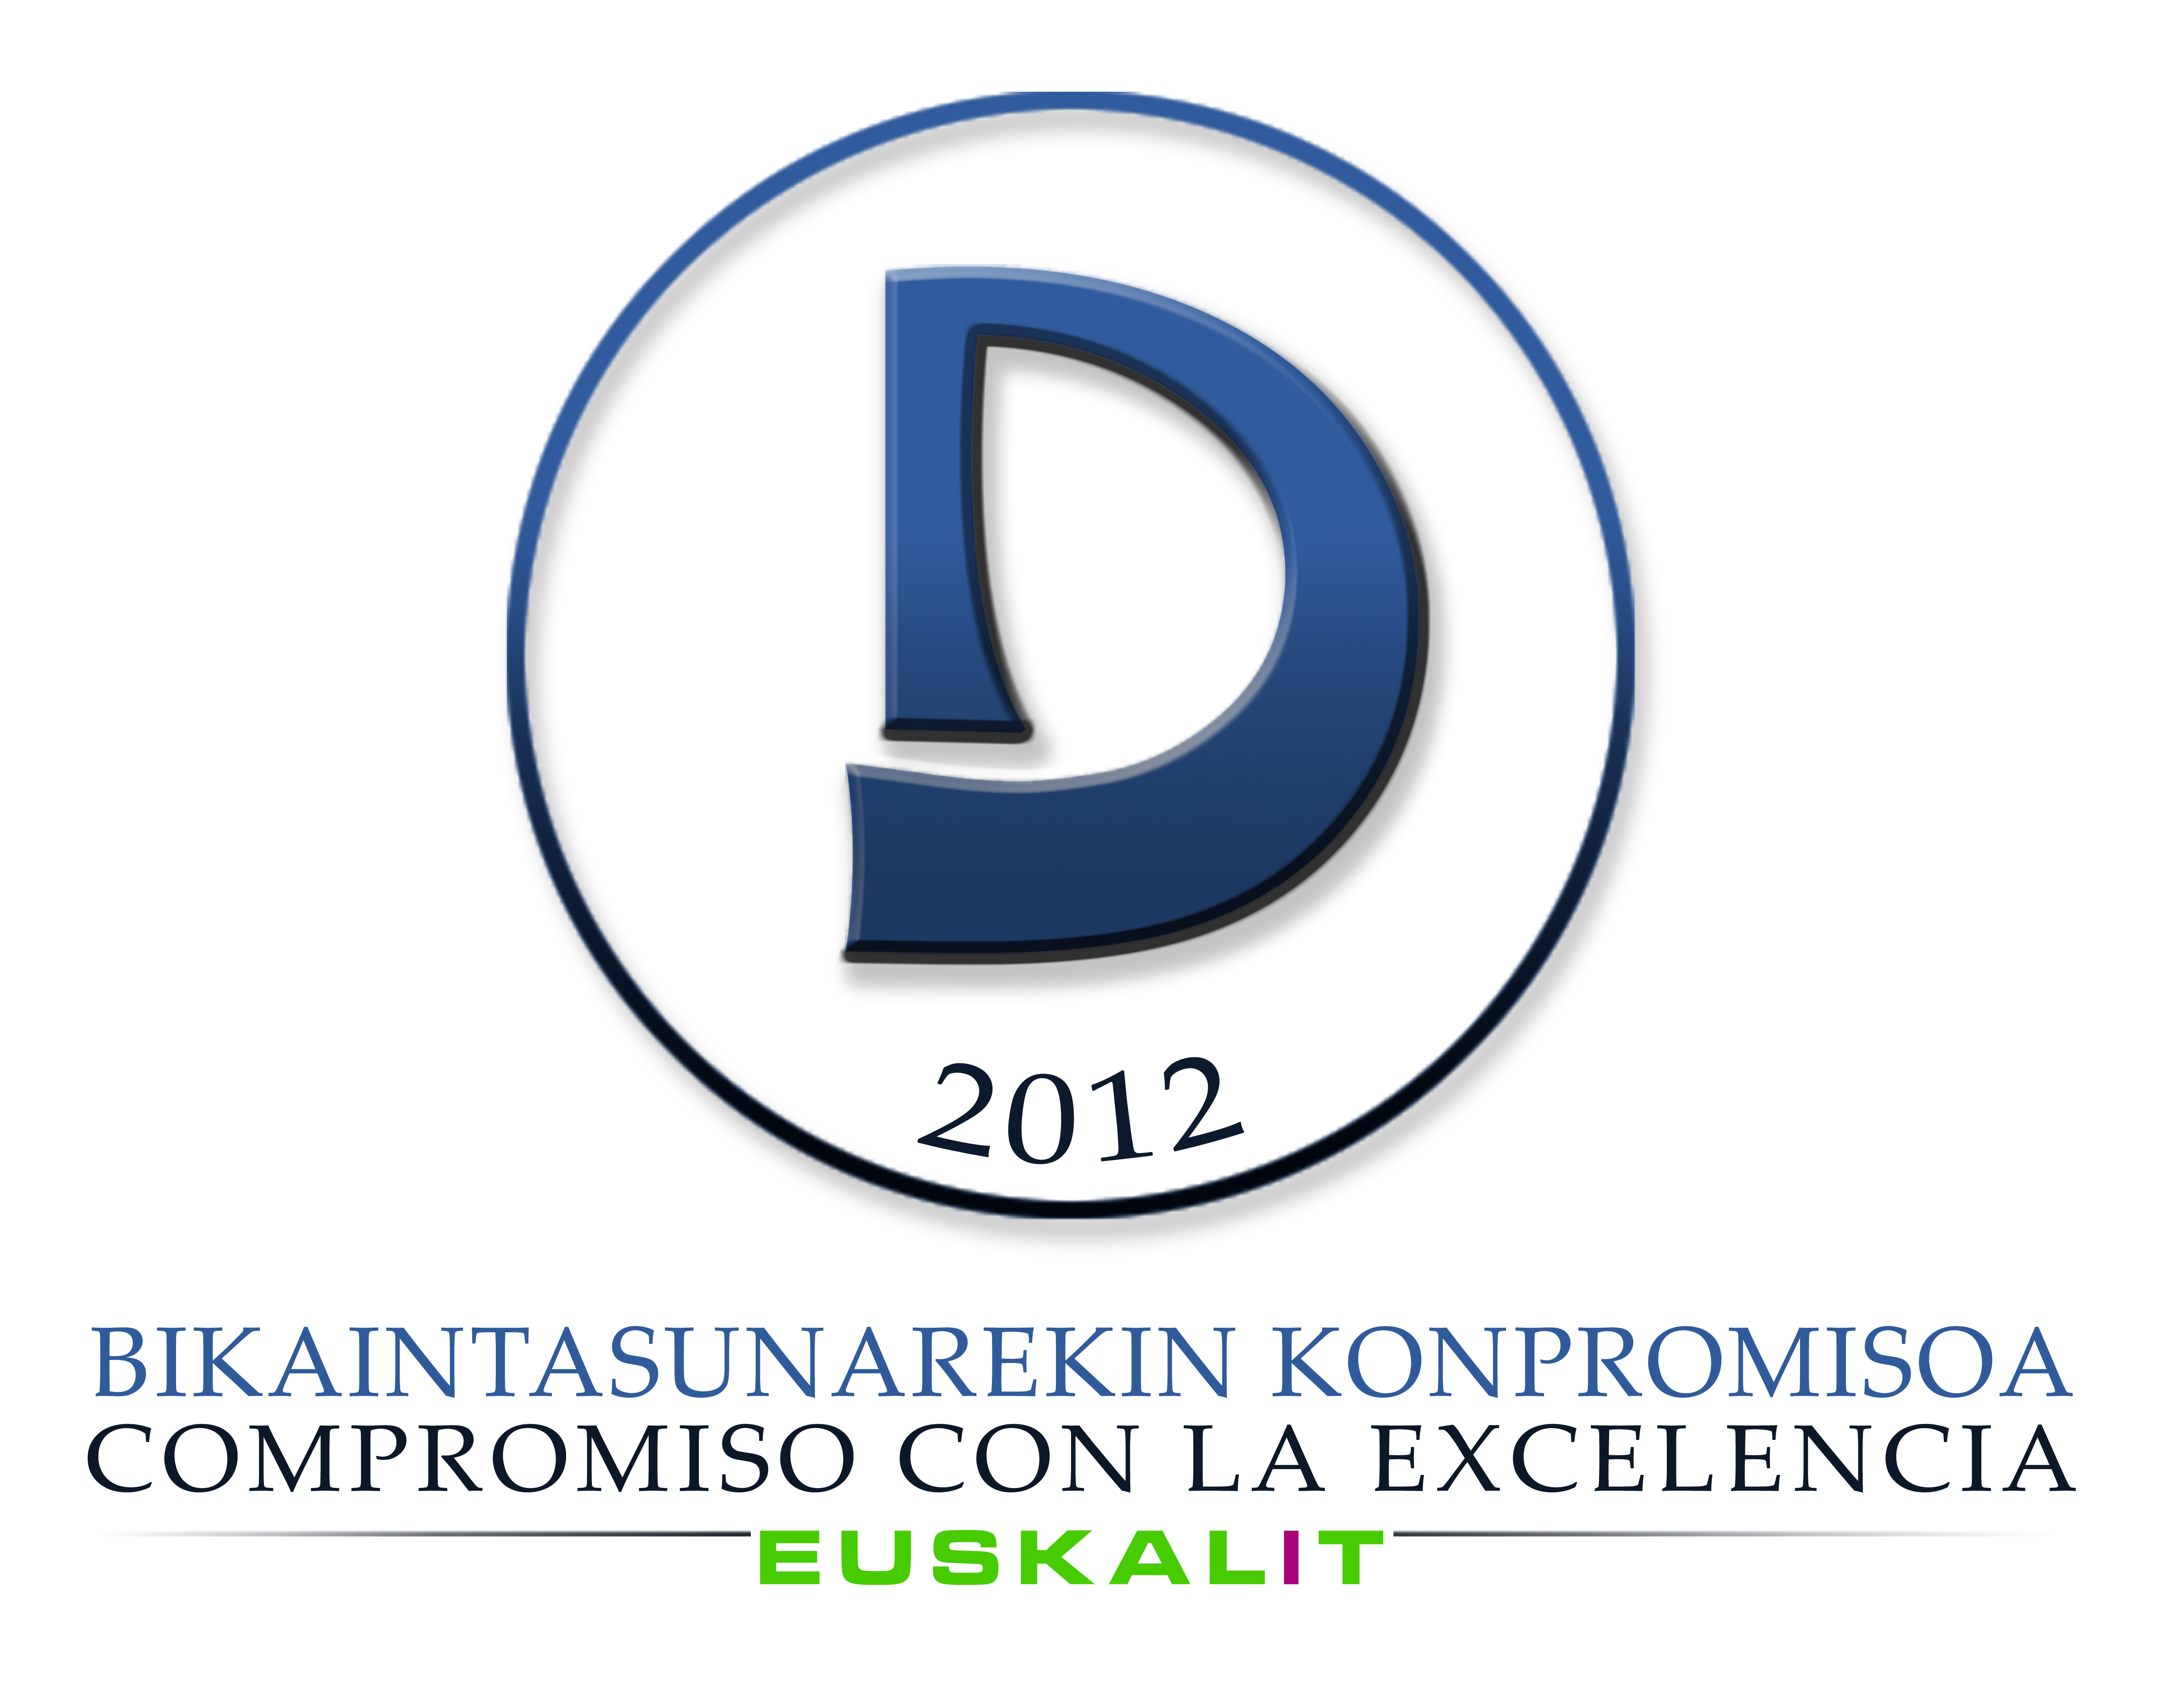 diplomaexcelencia2012.jpg - 1.39 Mb